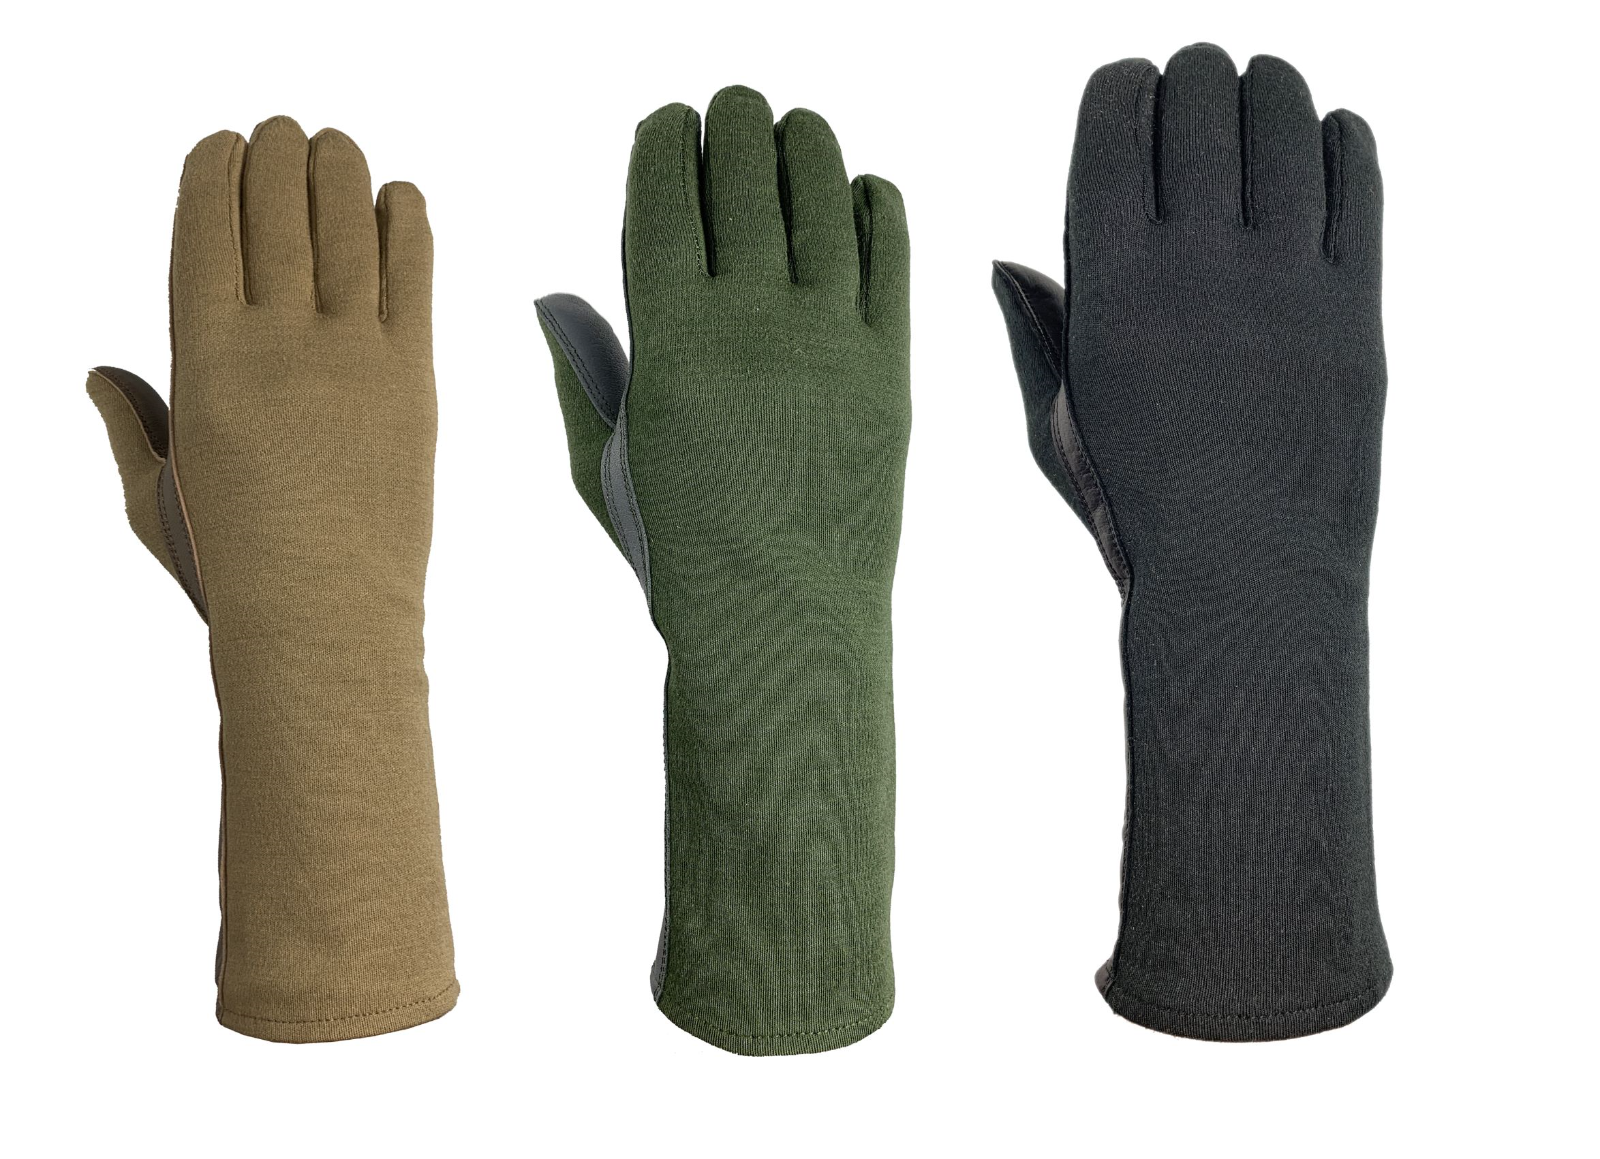 Nomex Flight Flyers Gloves Pilot Fire Resistant Black, Green, Tan-all Sizes